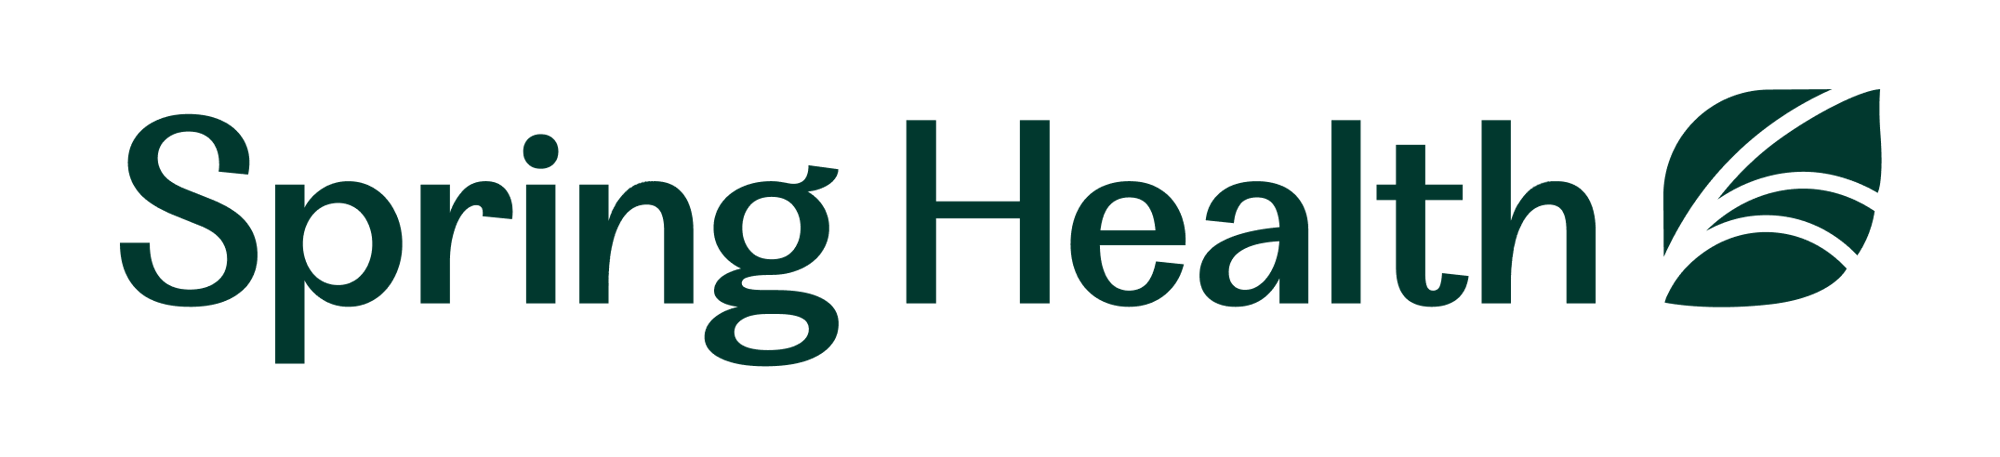 Spring Health-full logo-winter-green